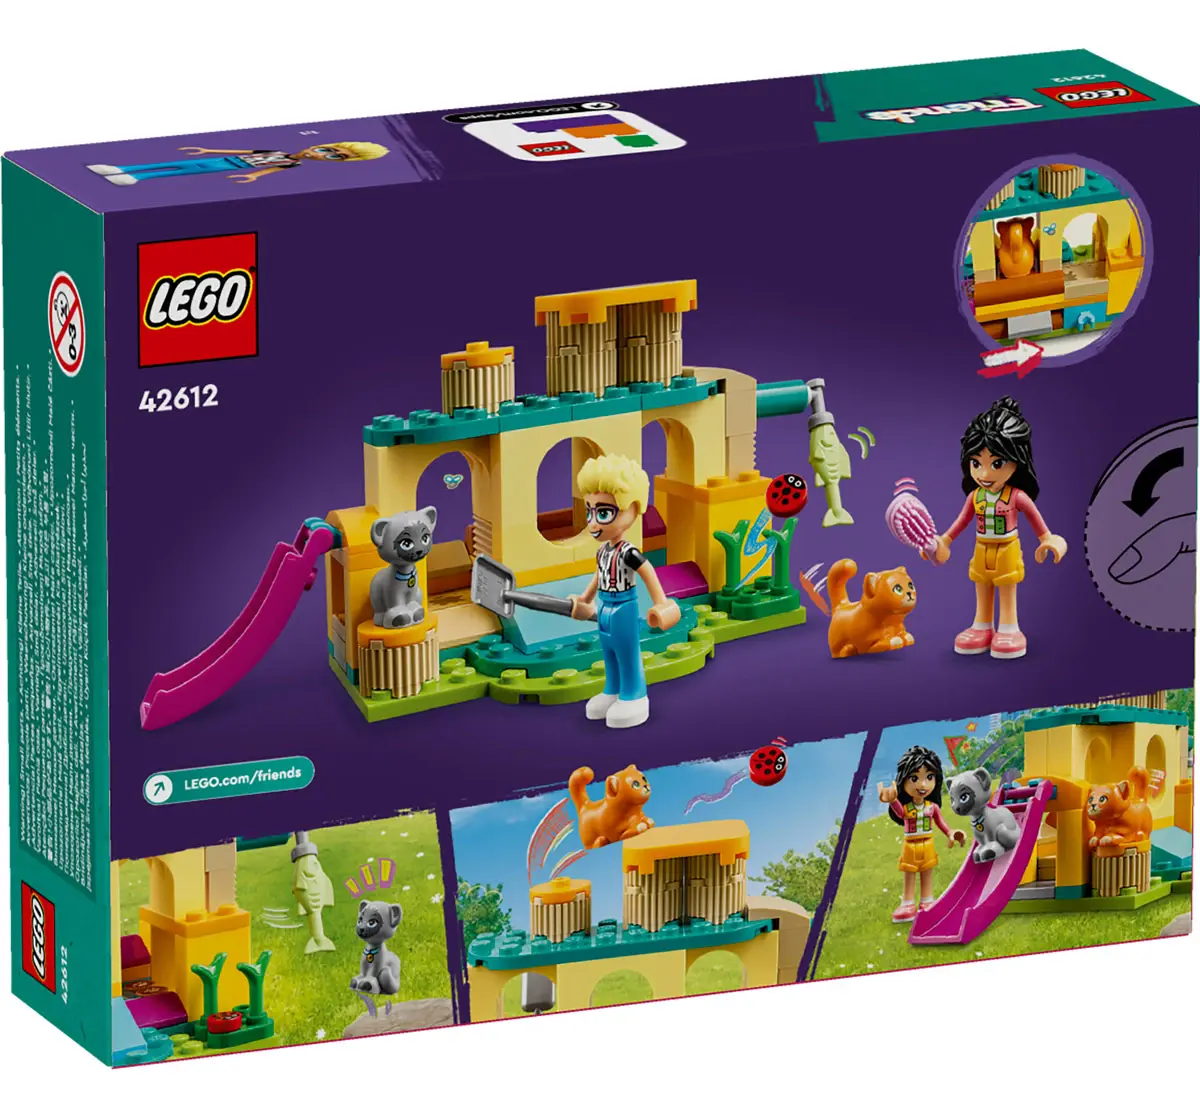 Lego Friends Cat Playground Adventure Set 42612 Multicolour For Kids Ages 5Y+ (87 Pieces) 